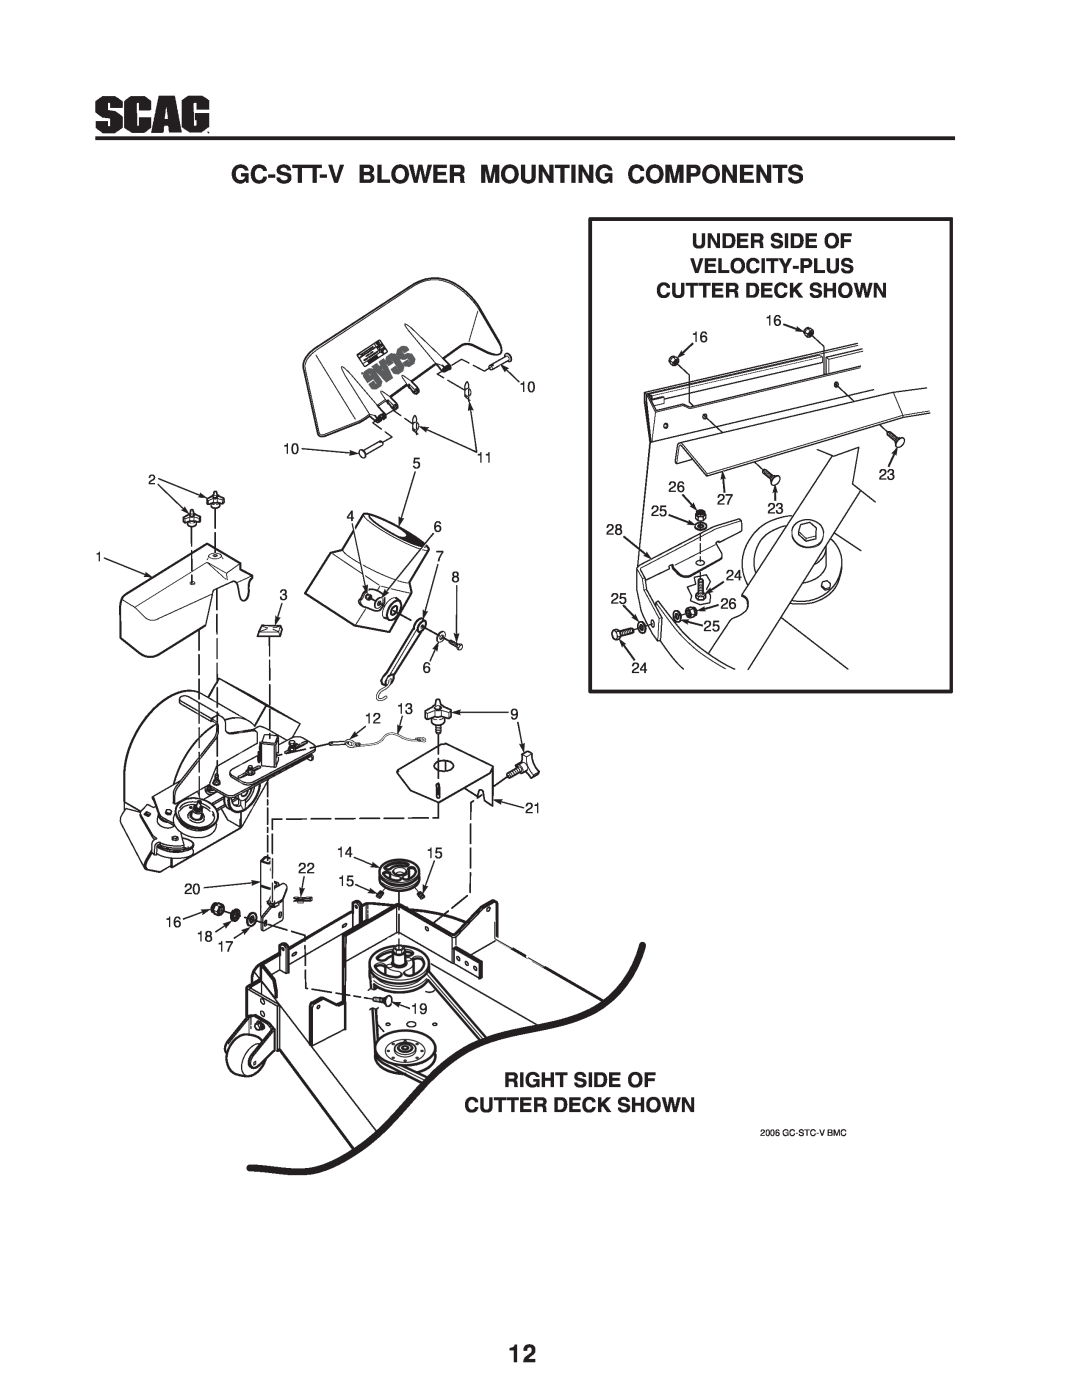 Scag Power Equipment GC-STT-V Gc-Stt-V Blower Mounting Components, Under Side Of, Velocity-Plus, Cutter Deck Shown 